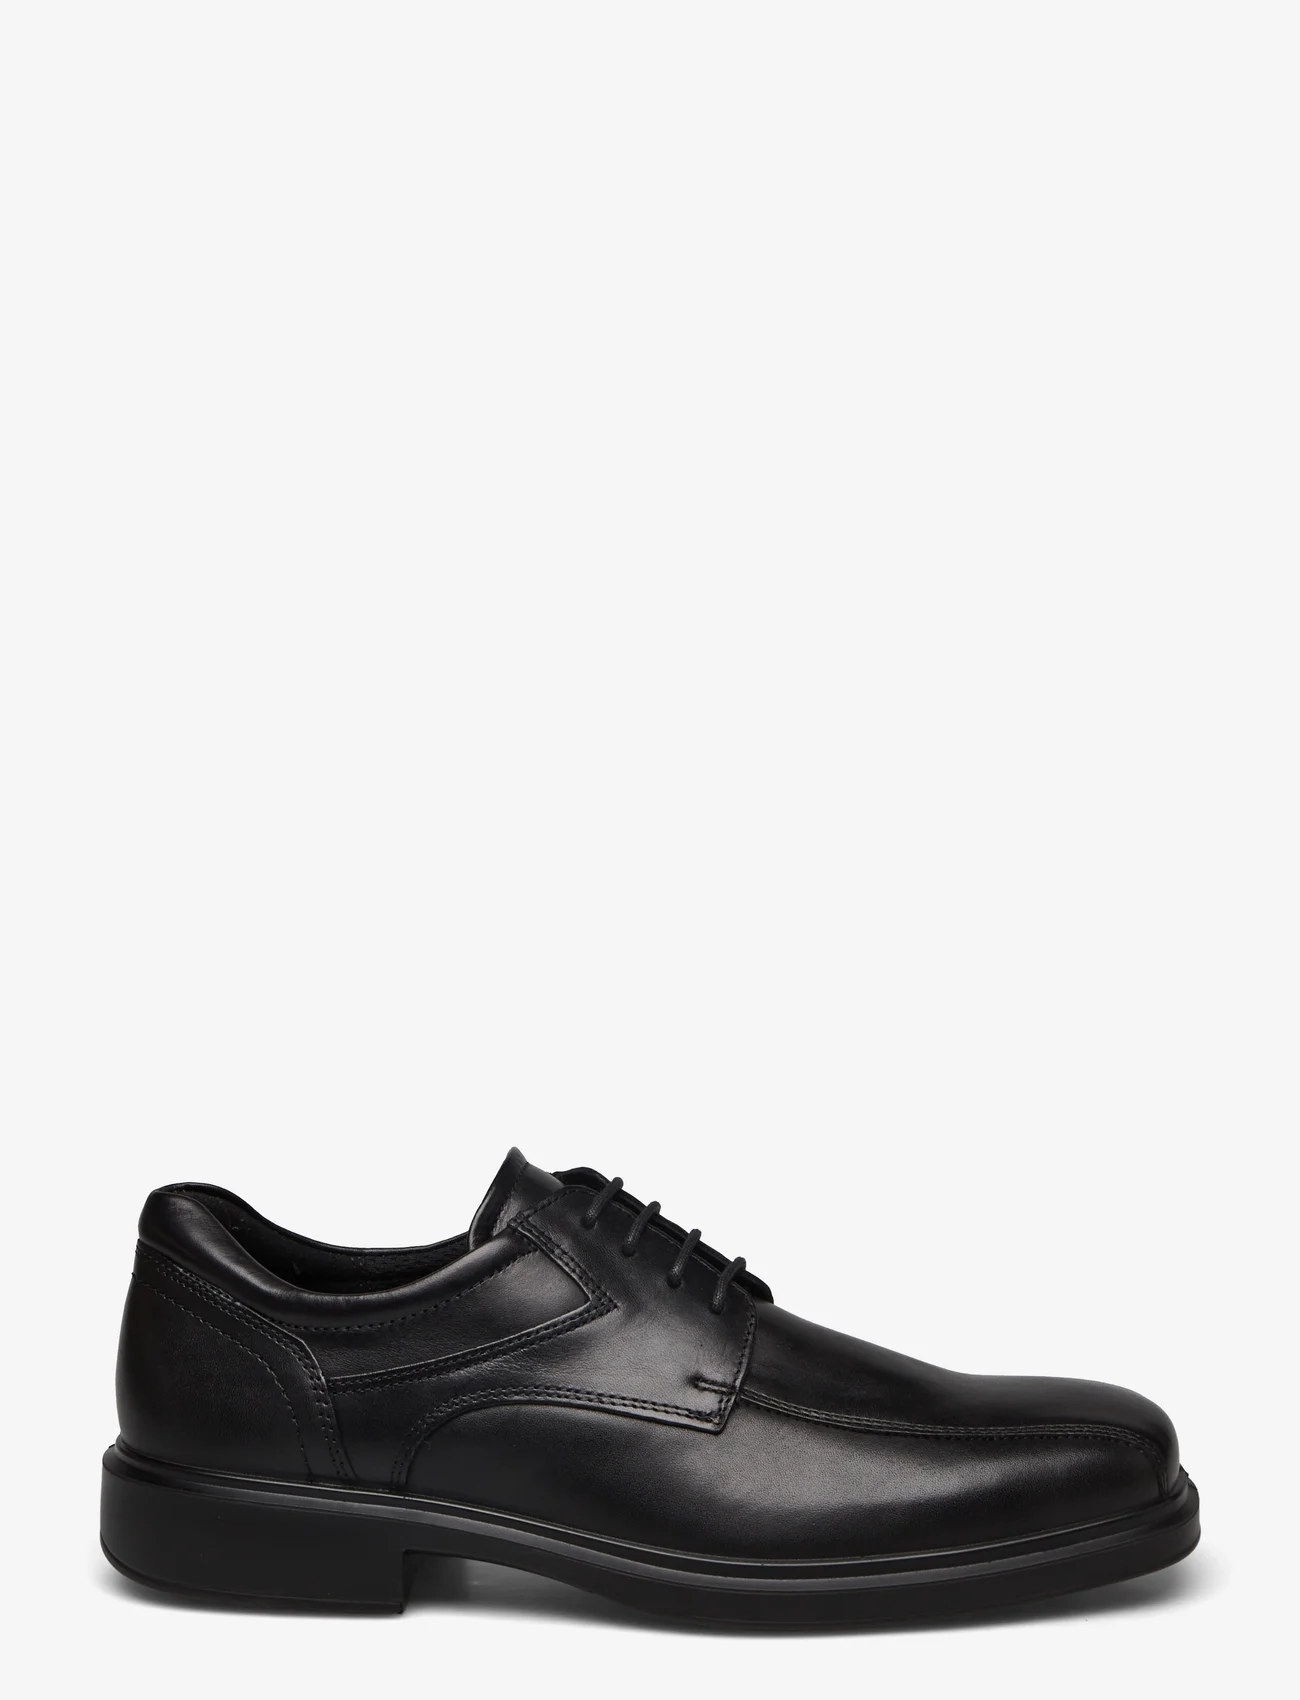 ECCO - HELSINKI 2 - laced shoes - black - 1